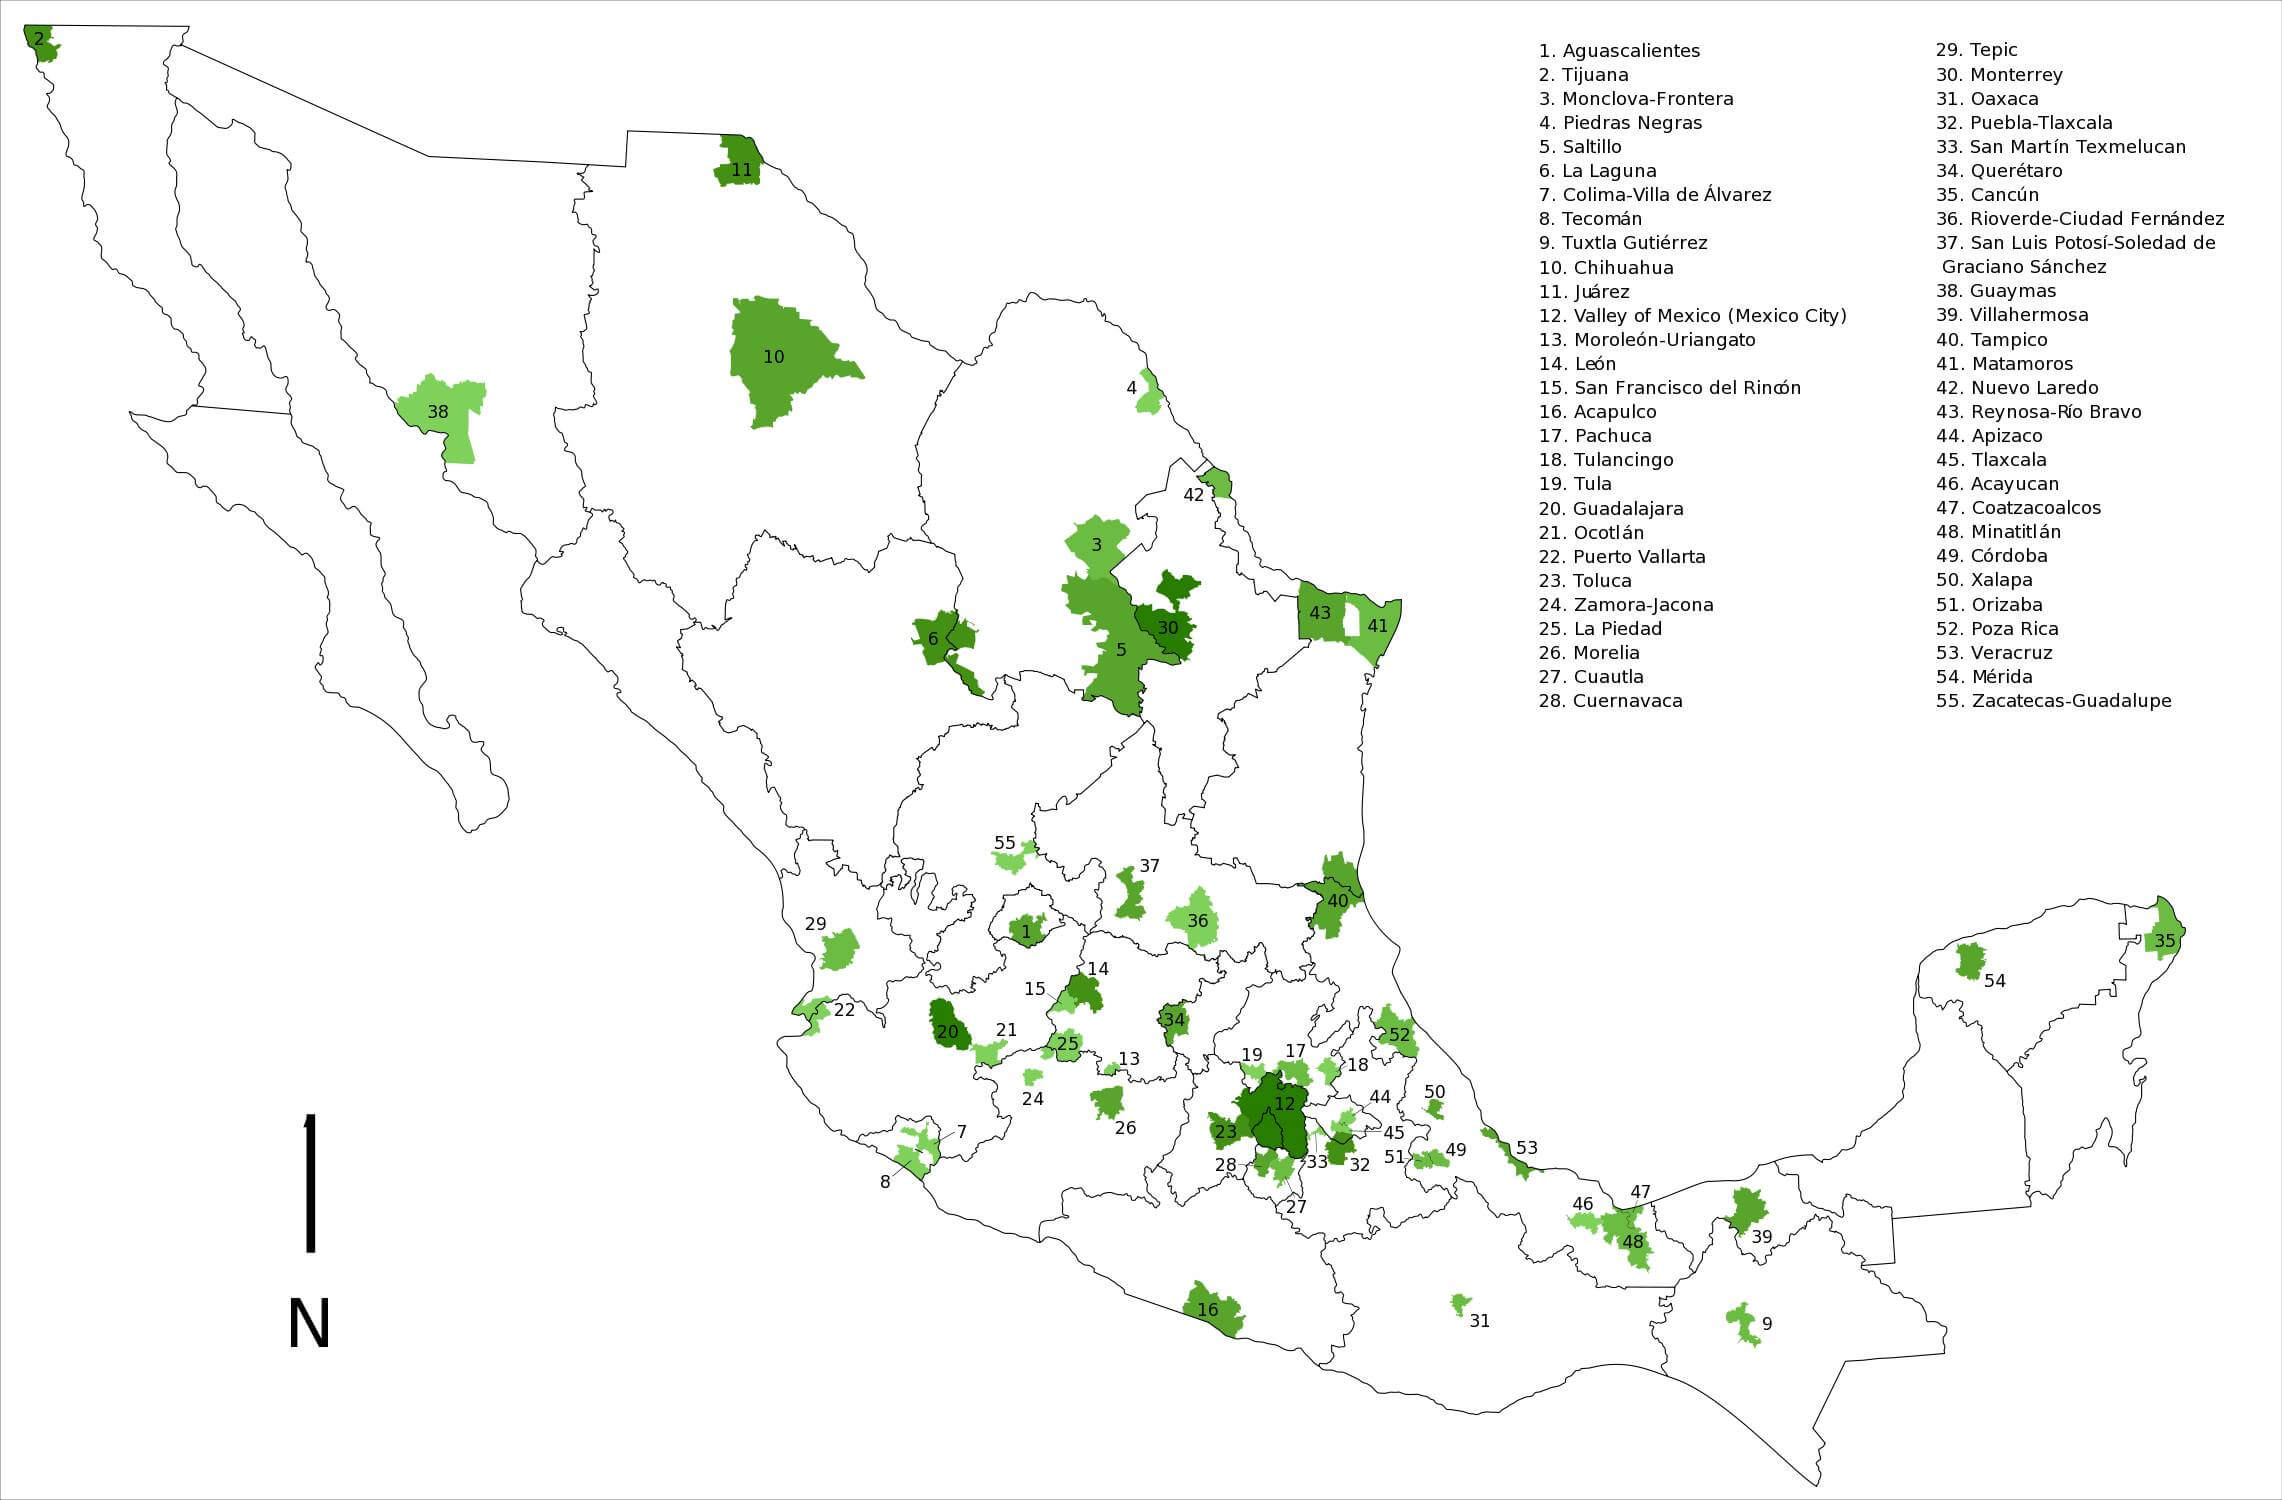 Metropolitan Areas Map of Mexico